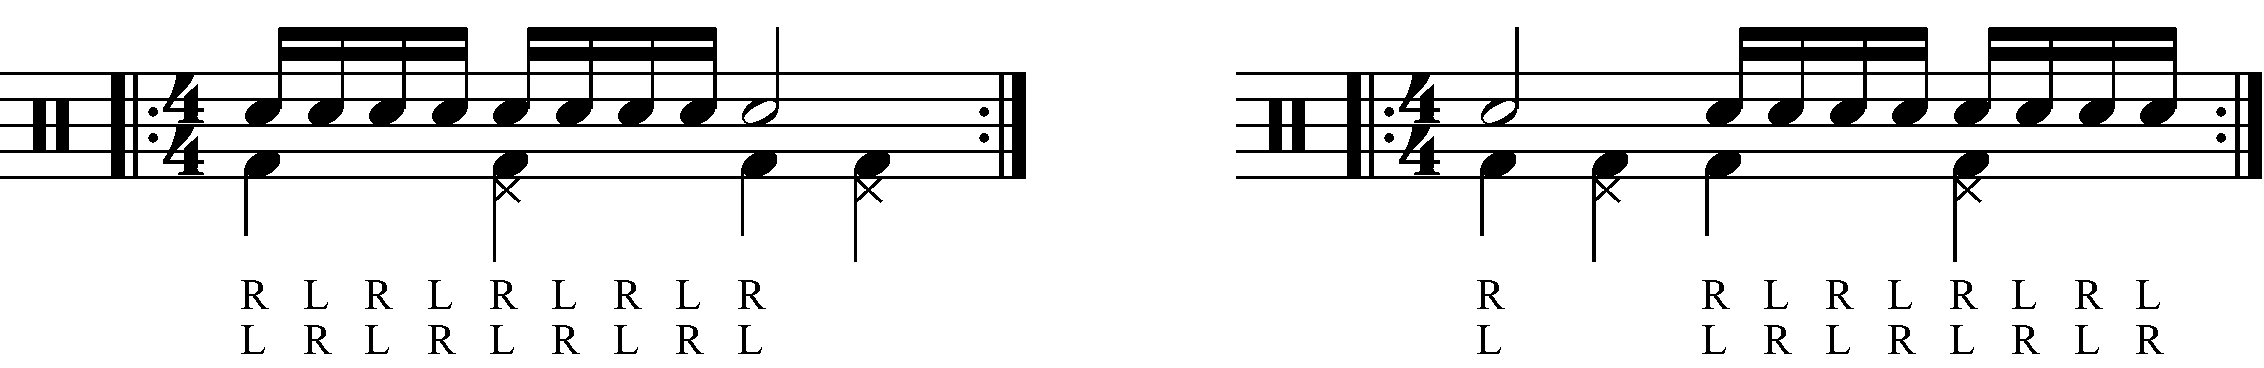 Adding quarter note feet under a single stroke 9